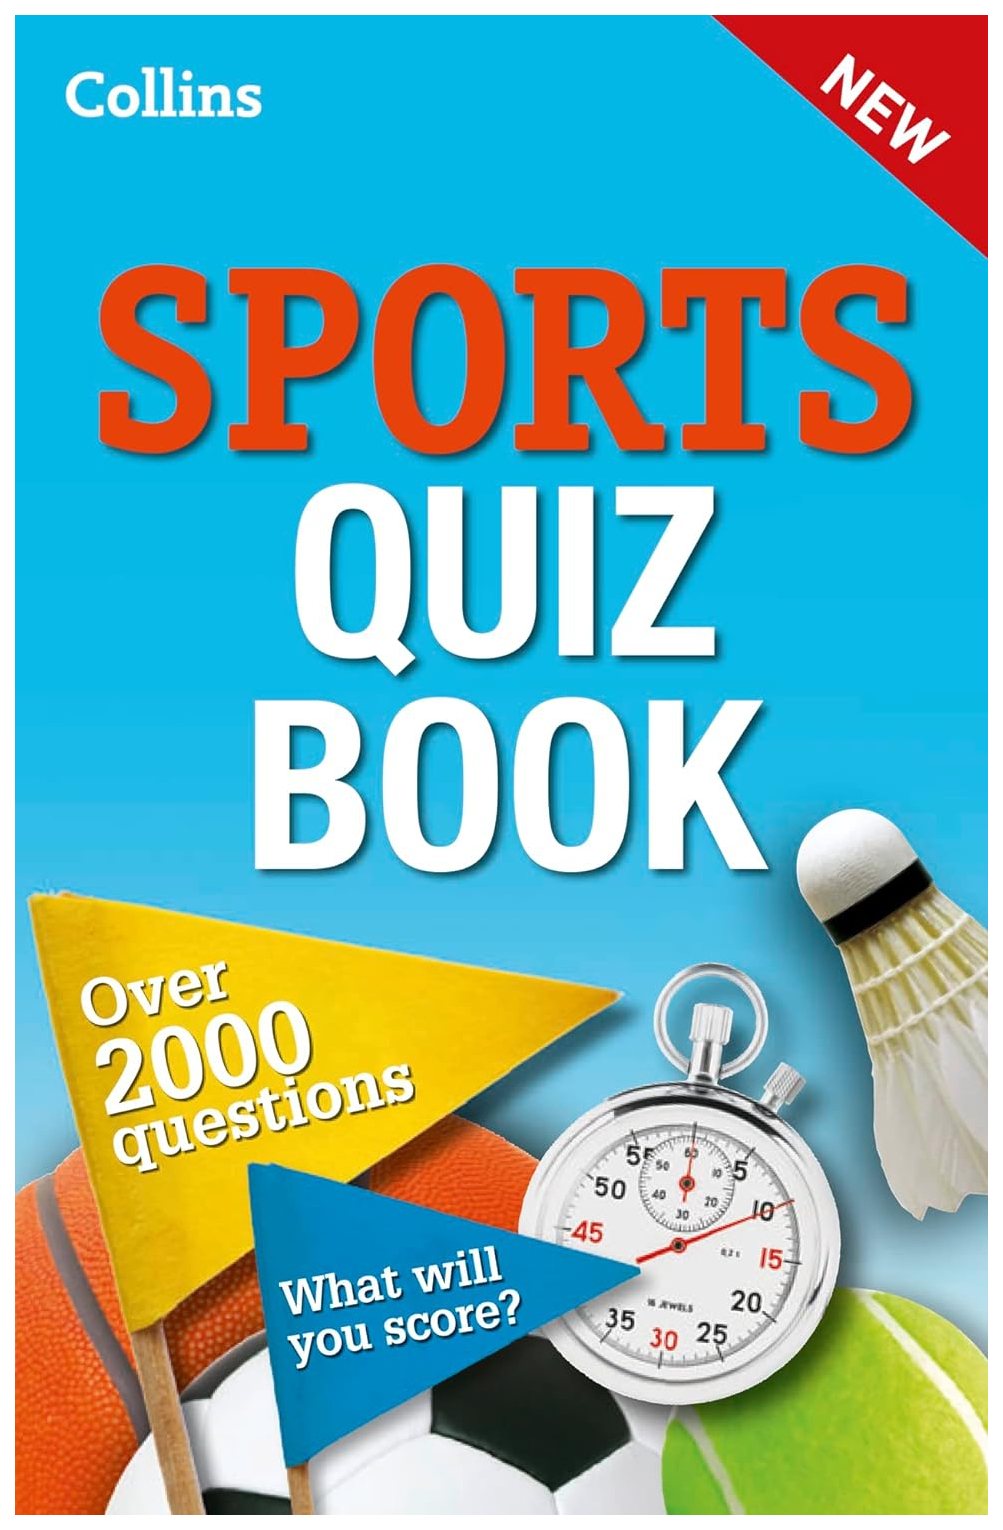 Quiz book. Collins books. Спортивный квиз. Квиз книга. Quizzes for Sports.